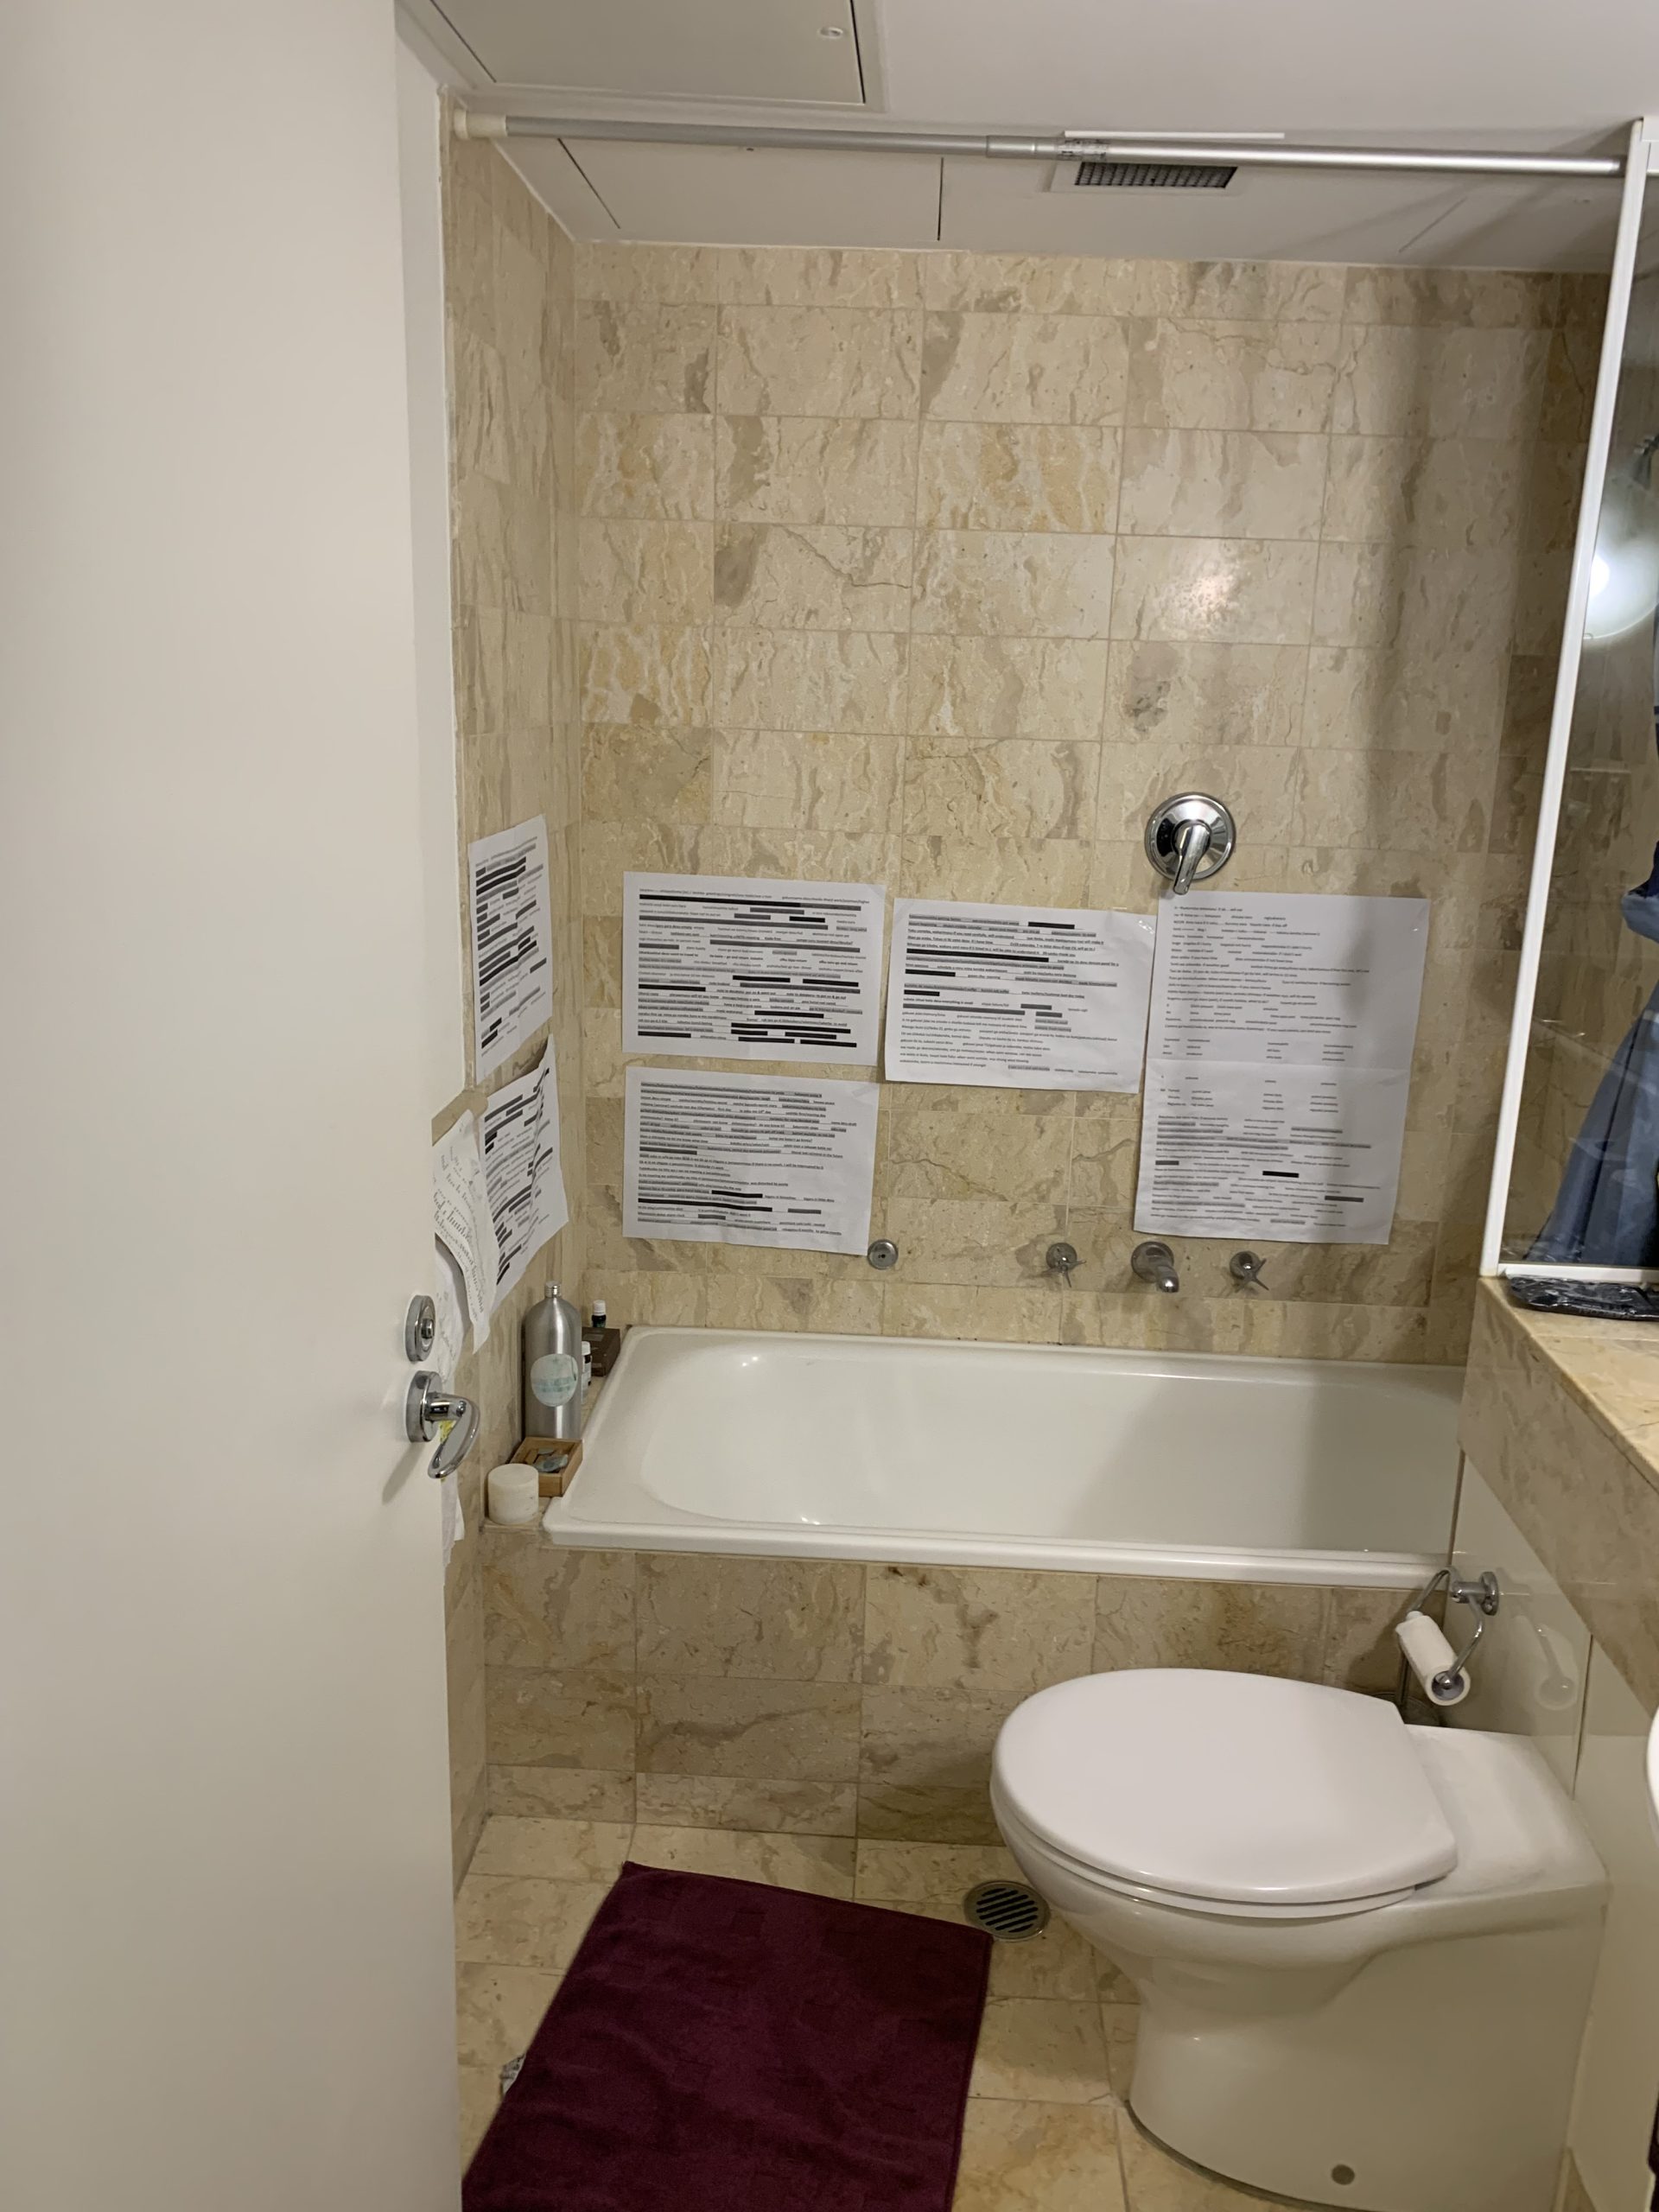 Mosman bathroom renovation services